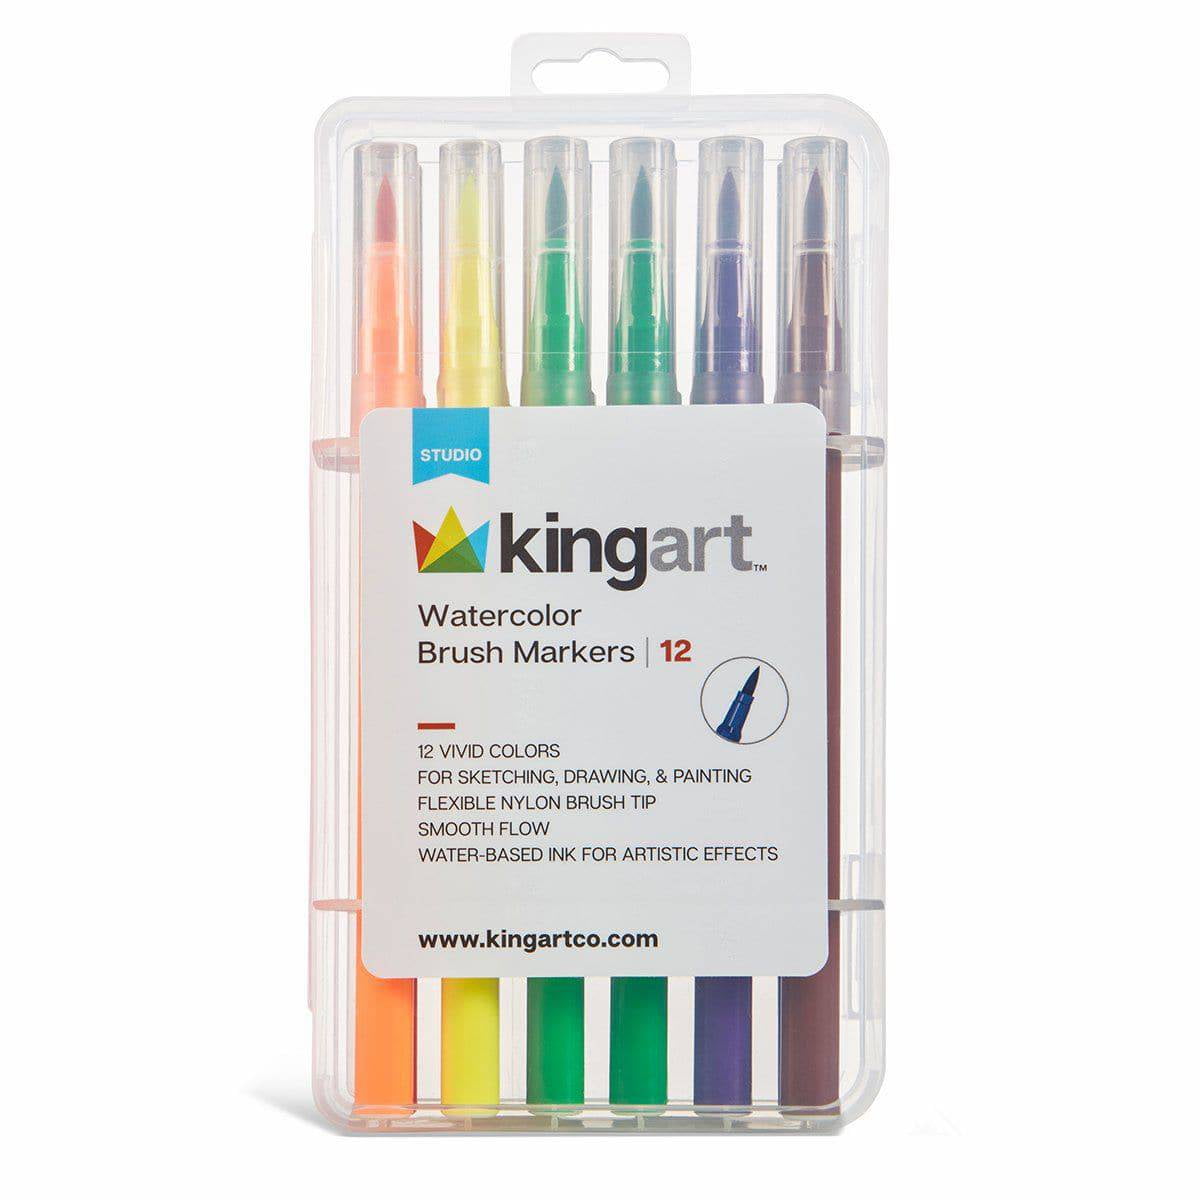 KINGART Studio Watercolor Brush Markers, Travel/Storage Case, Set of 12 Unique Colors